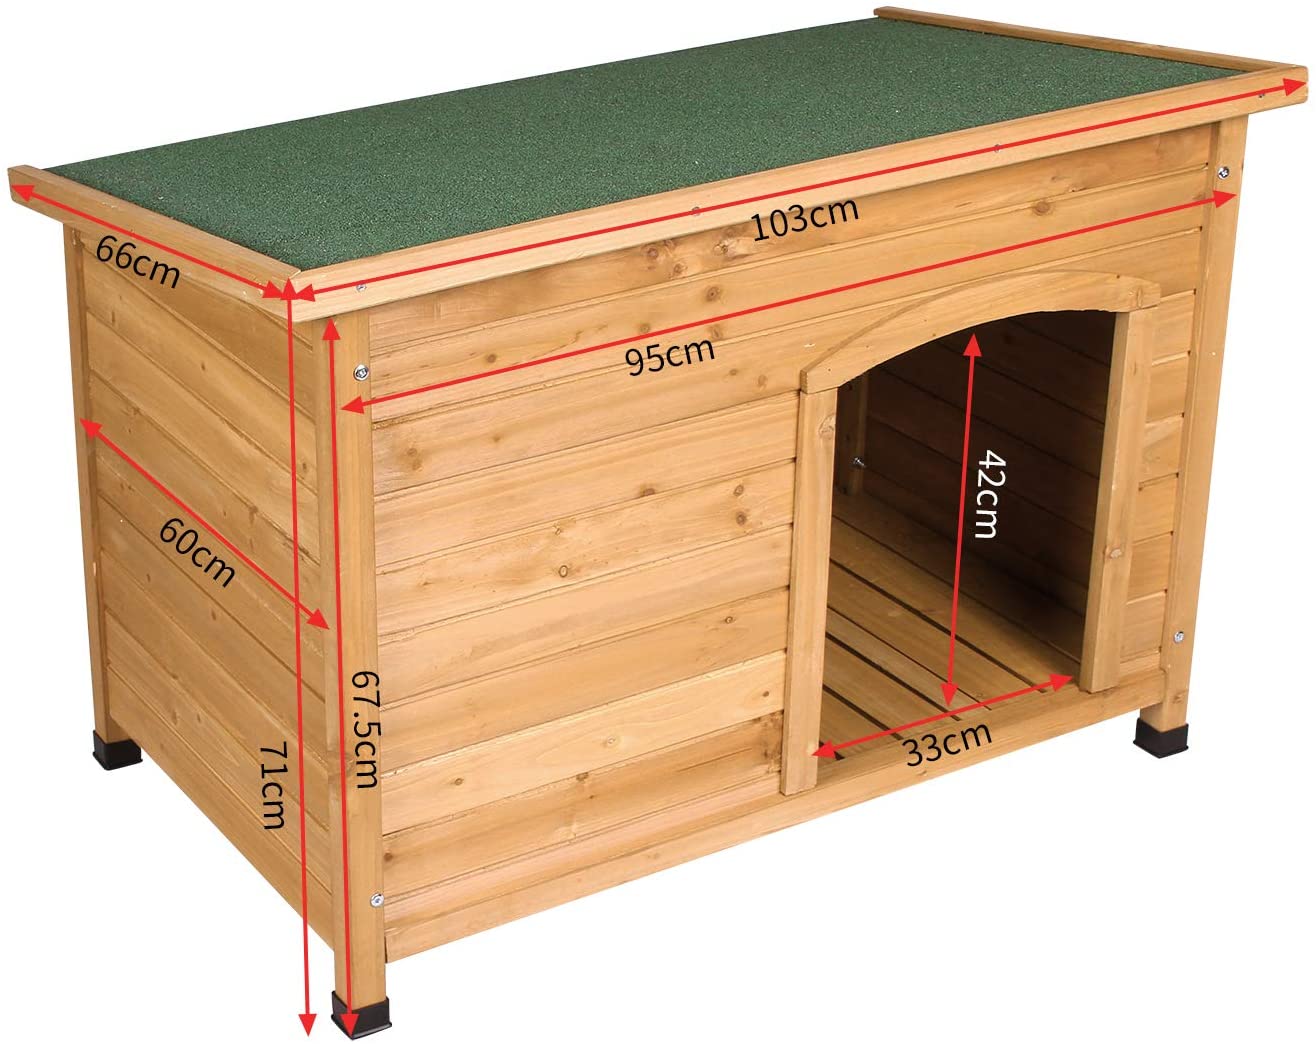  Elightry Caseta de Perros para Exterior Casa para Perro de Madera Resistente Impermeable 103 x 66 x 71cm YDMGL0001 